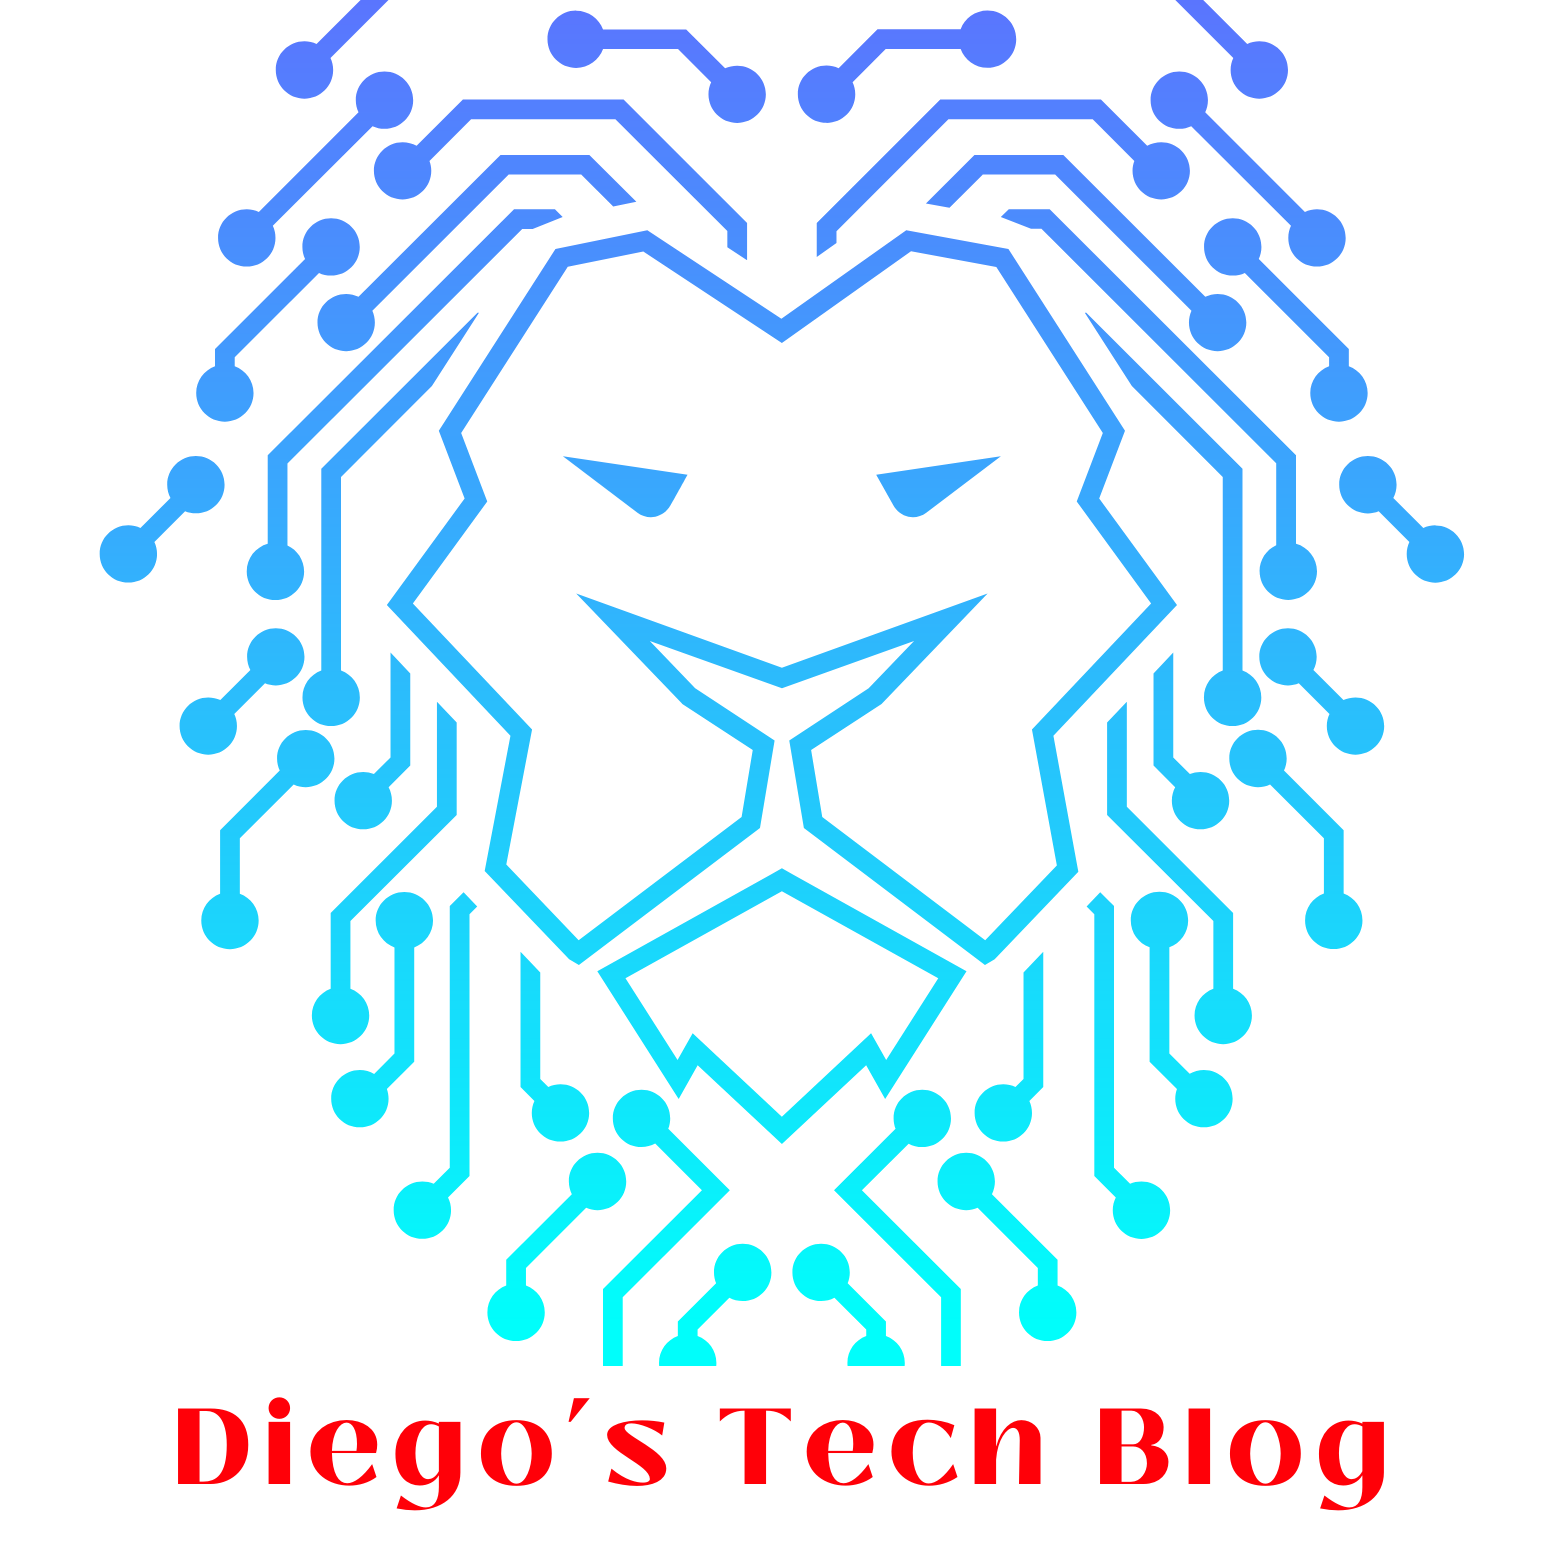 Diego's Tech Blog